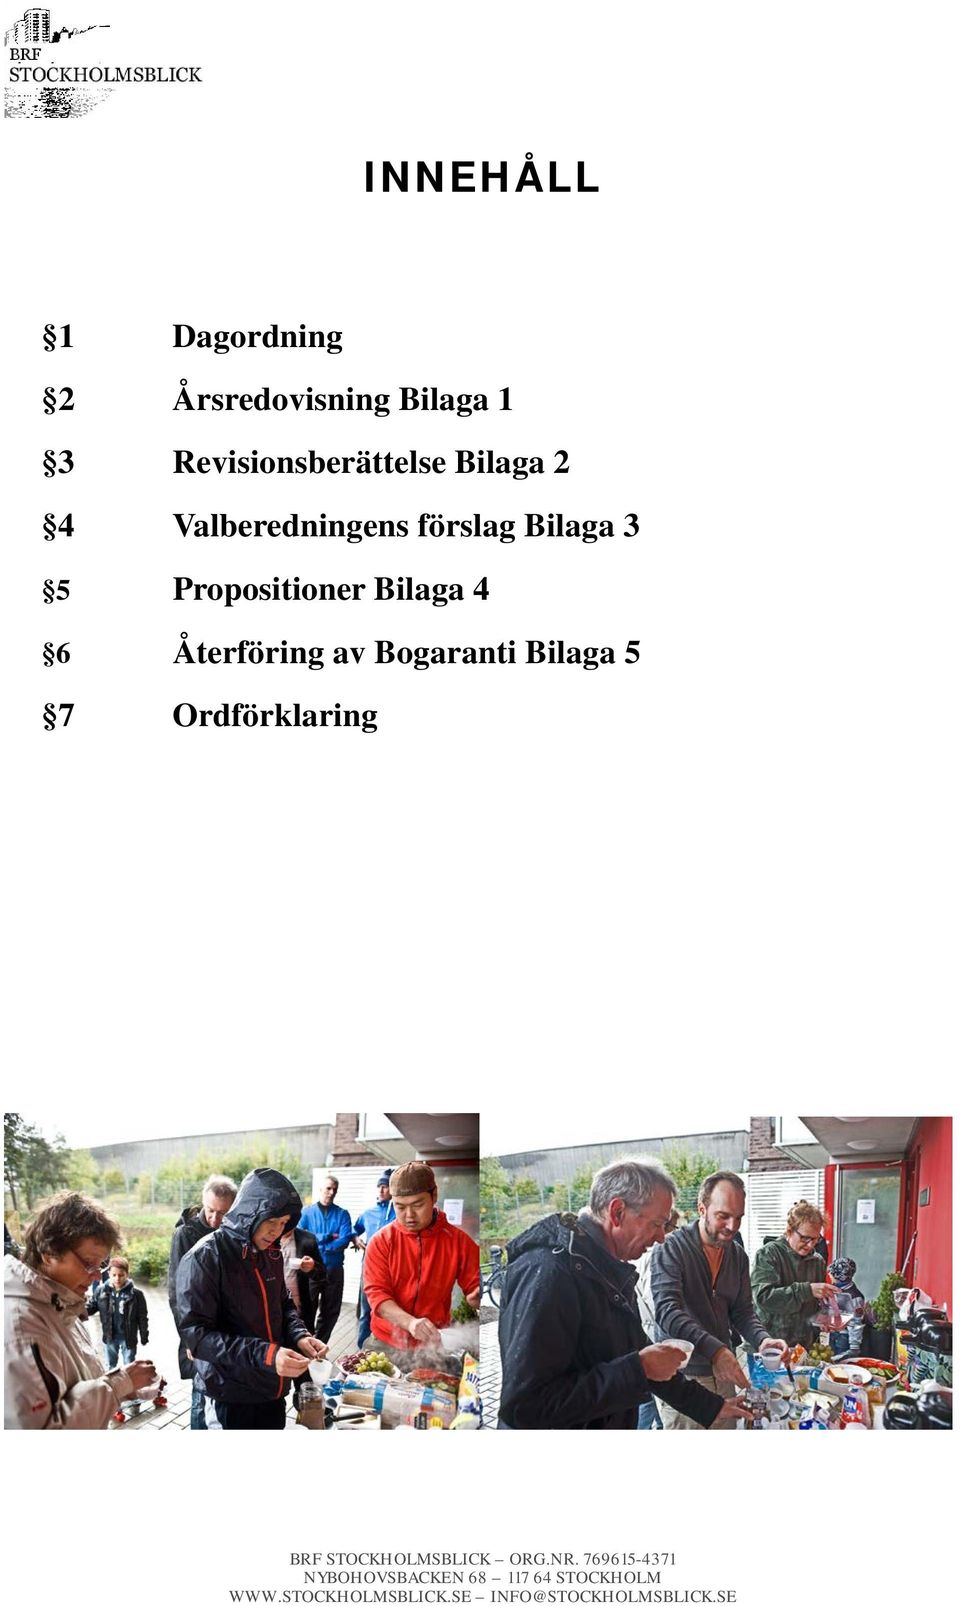 Bogaranti Bilaga 5 7 Ordförklaring BRF STOCKHOLMSBLICK ORG.NR.